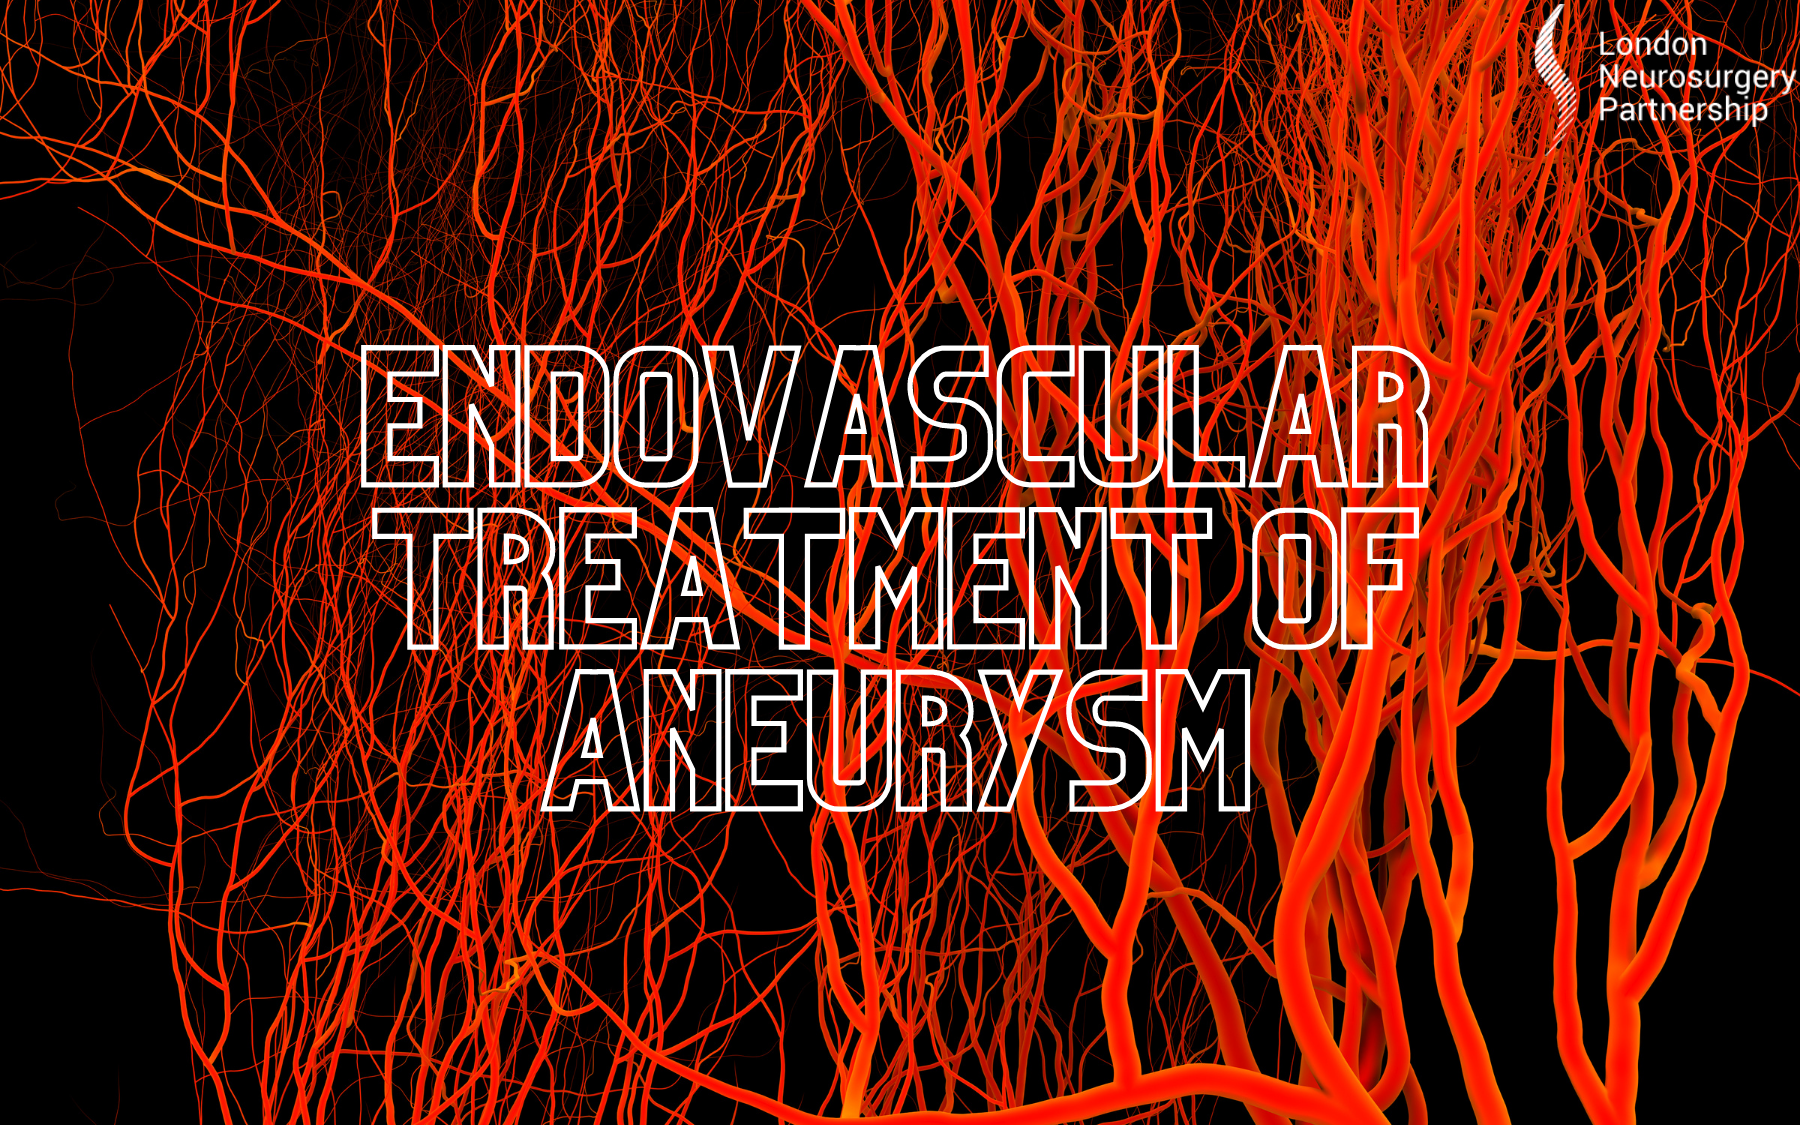 Endovascular treatment of aneurysm